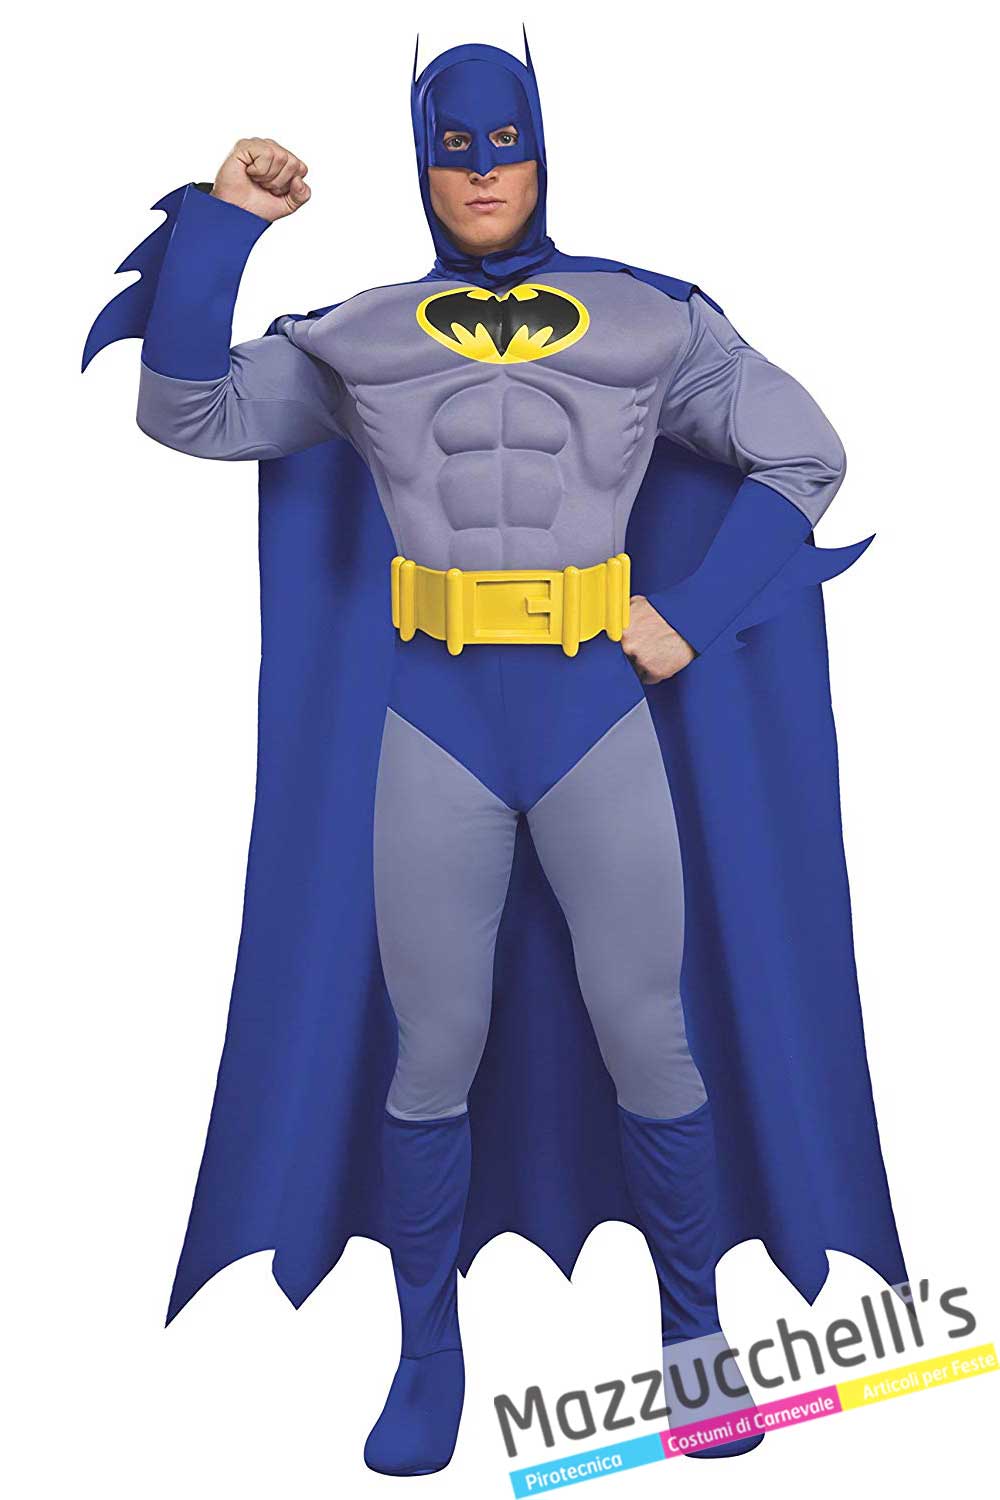 Costume Batman in vendita a Samarate Varese da Mazzucchellis